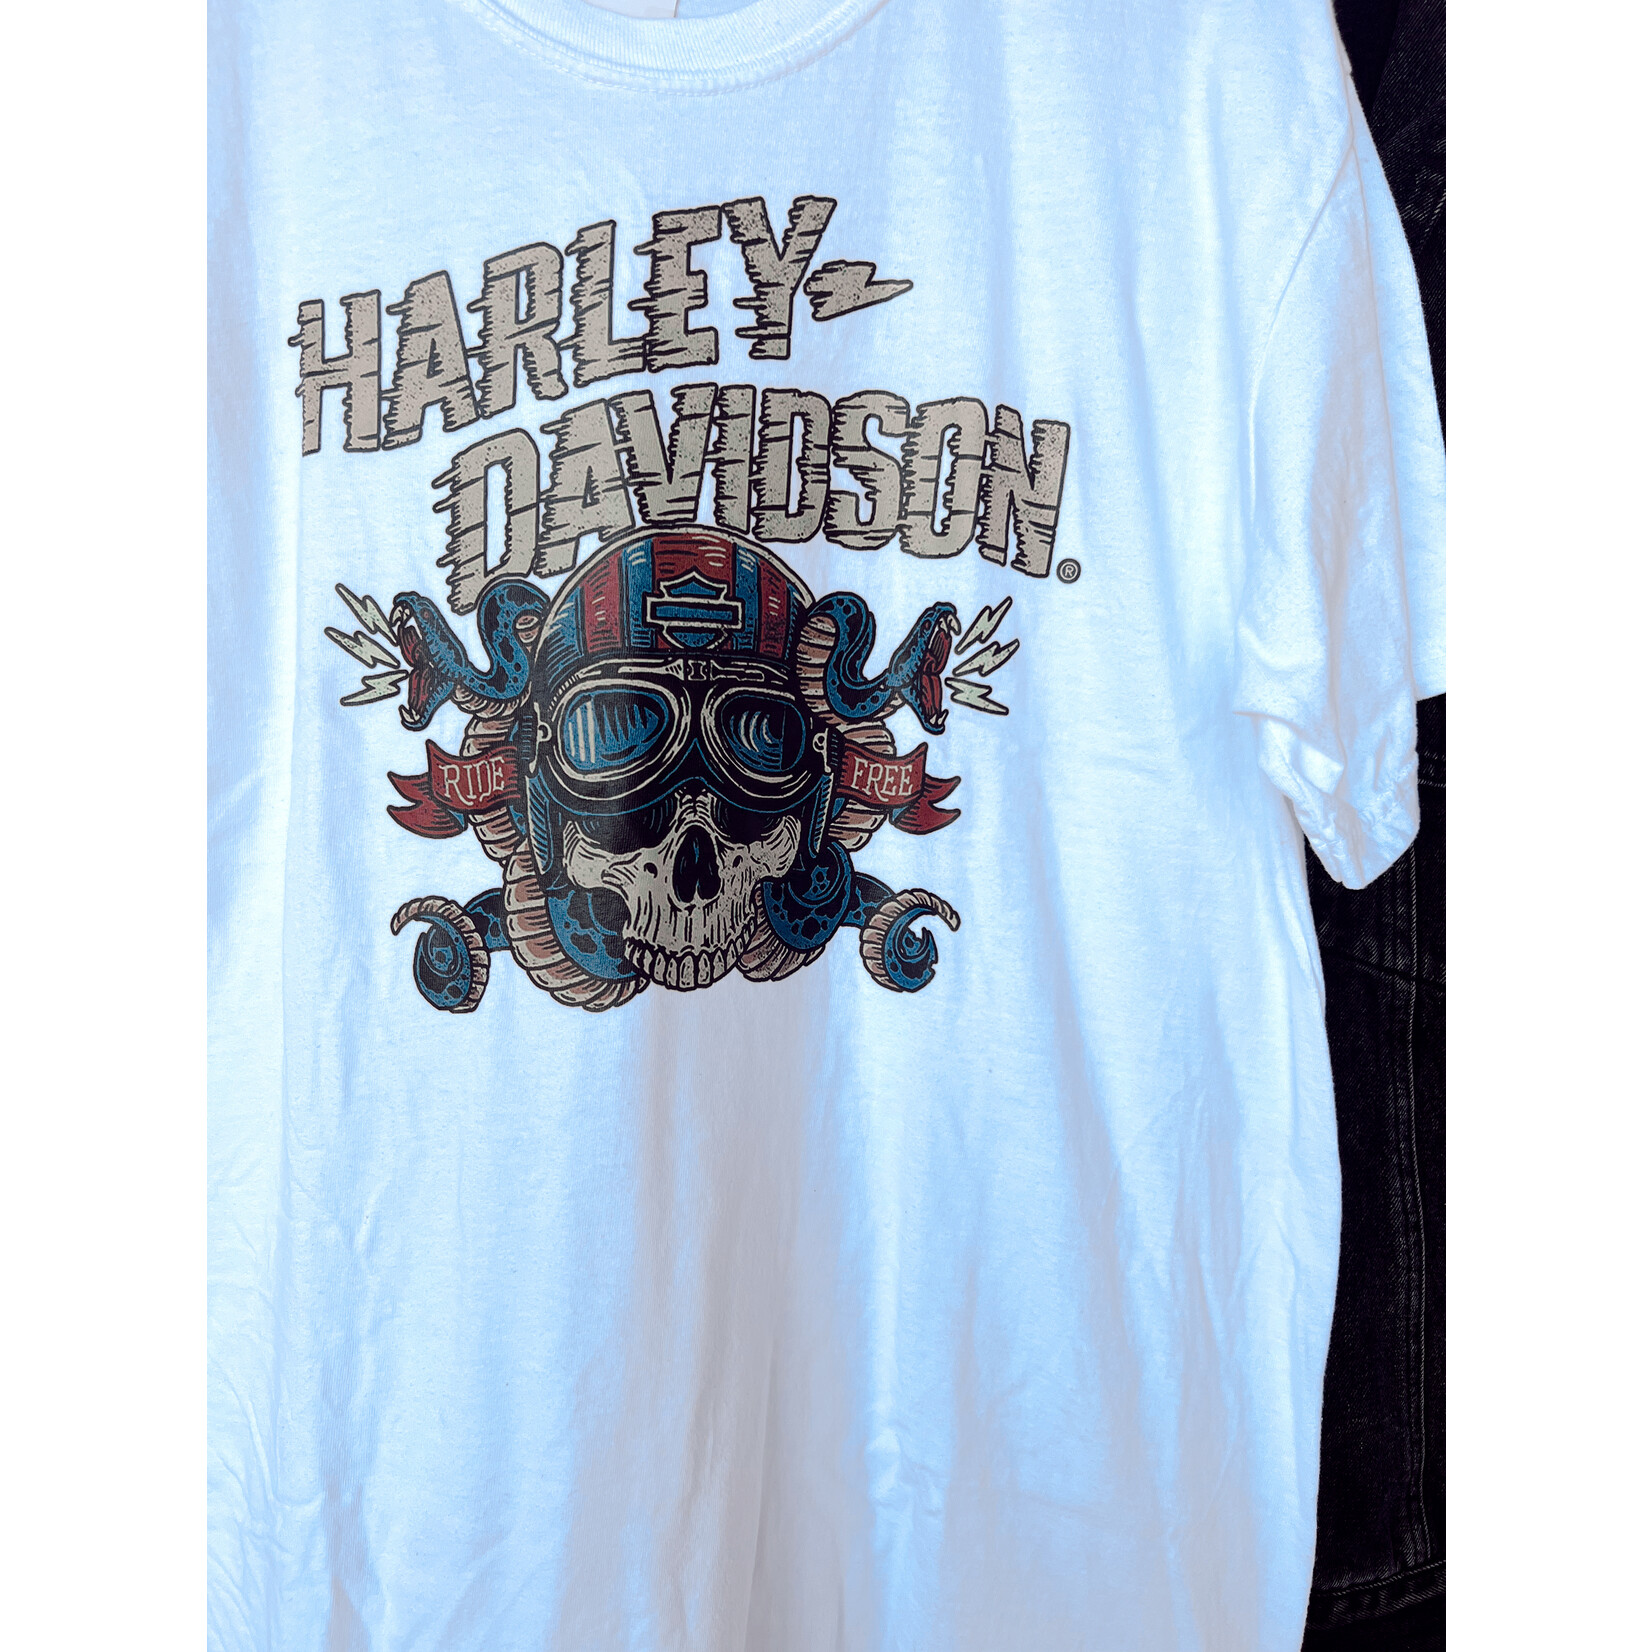 Harley Davidson Skull Tee